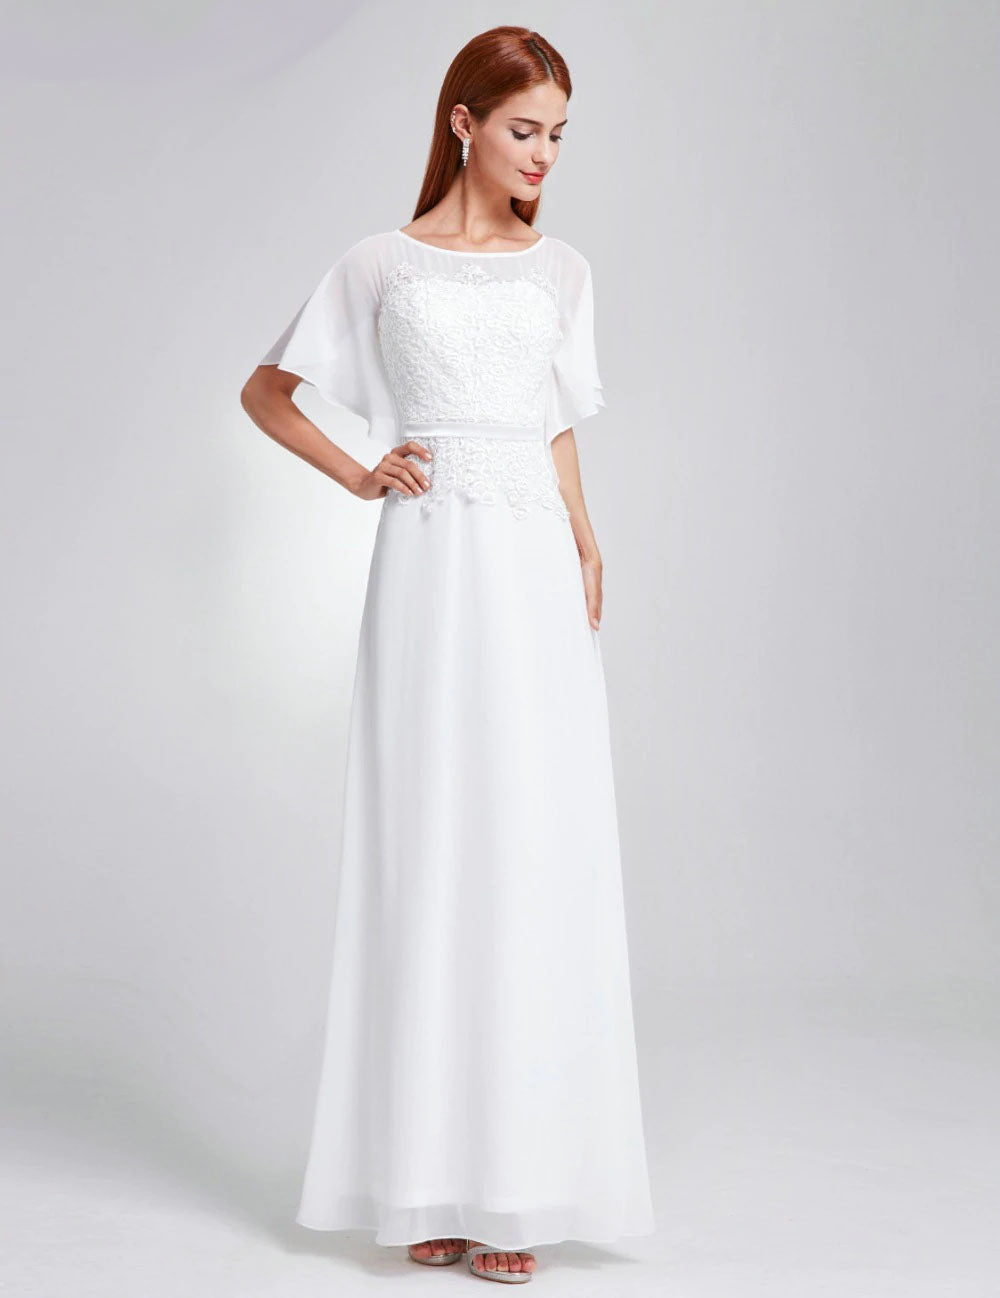 The Bernice :: Vintage Style Lace Overlay Soft Chiffon A-Line Wedding Dress